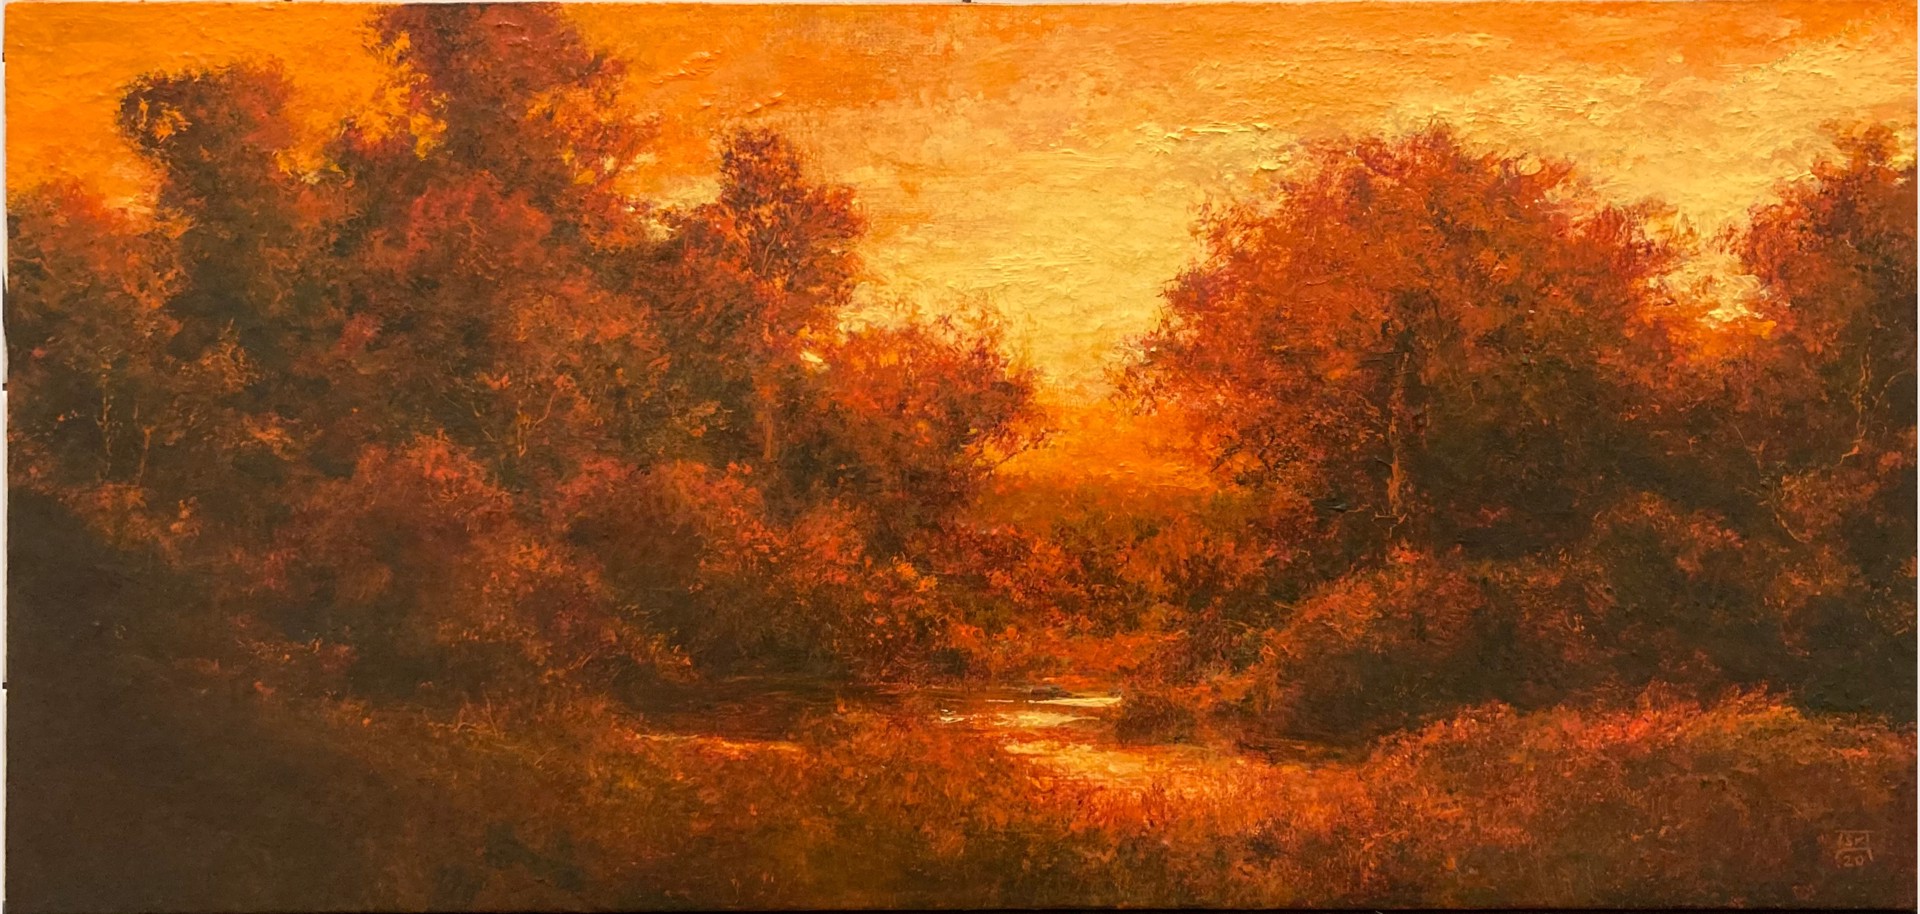 Sundown at Miller's Pond by Shawn Krueger